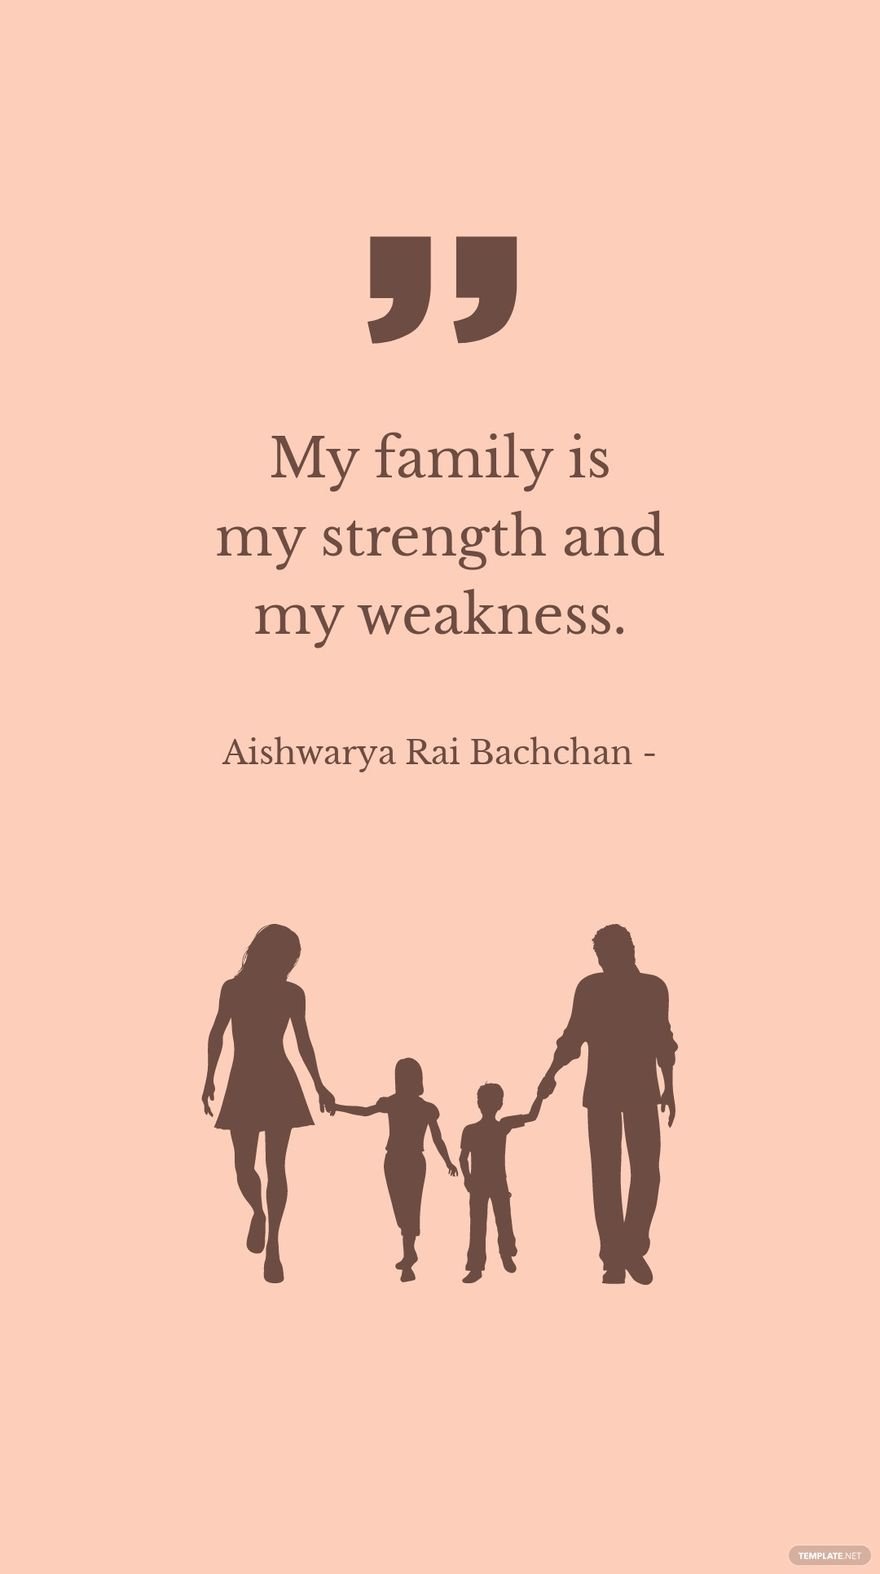 Aishwarya Rai Bachchan - My family is my strength and my weakness.